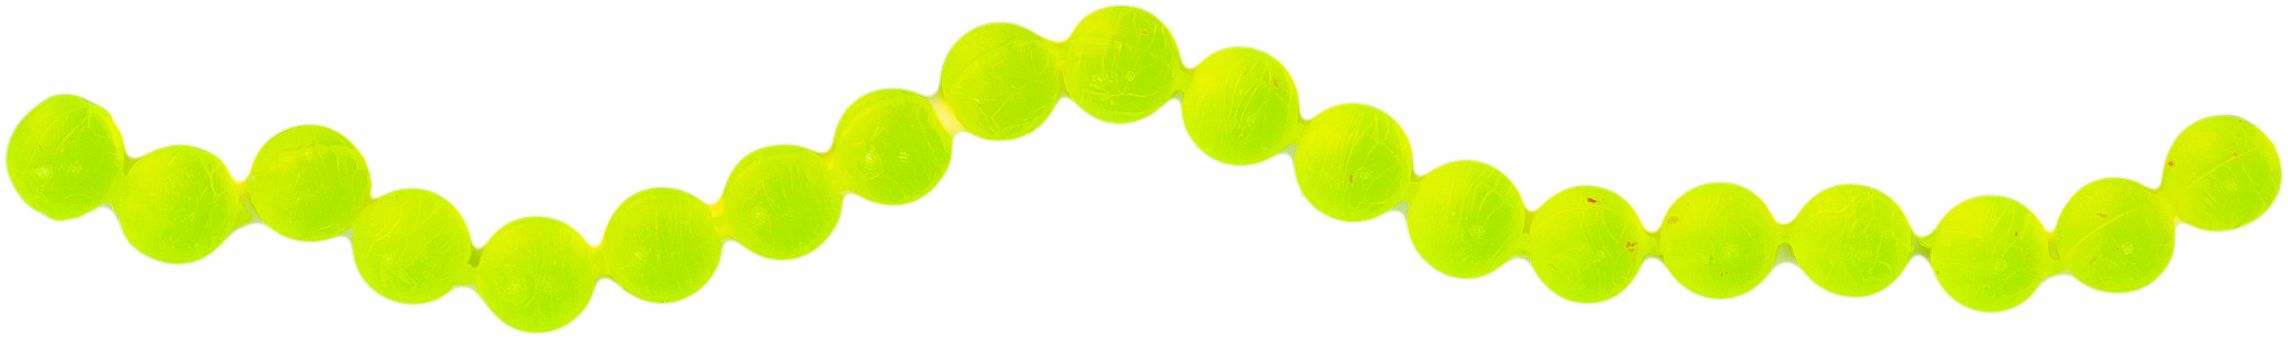 Appâts d'imitation Lion Sports Futura Soft Balls Jaunes